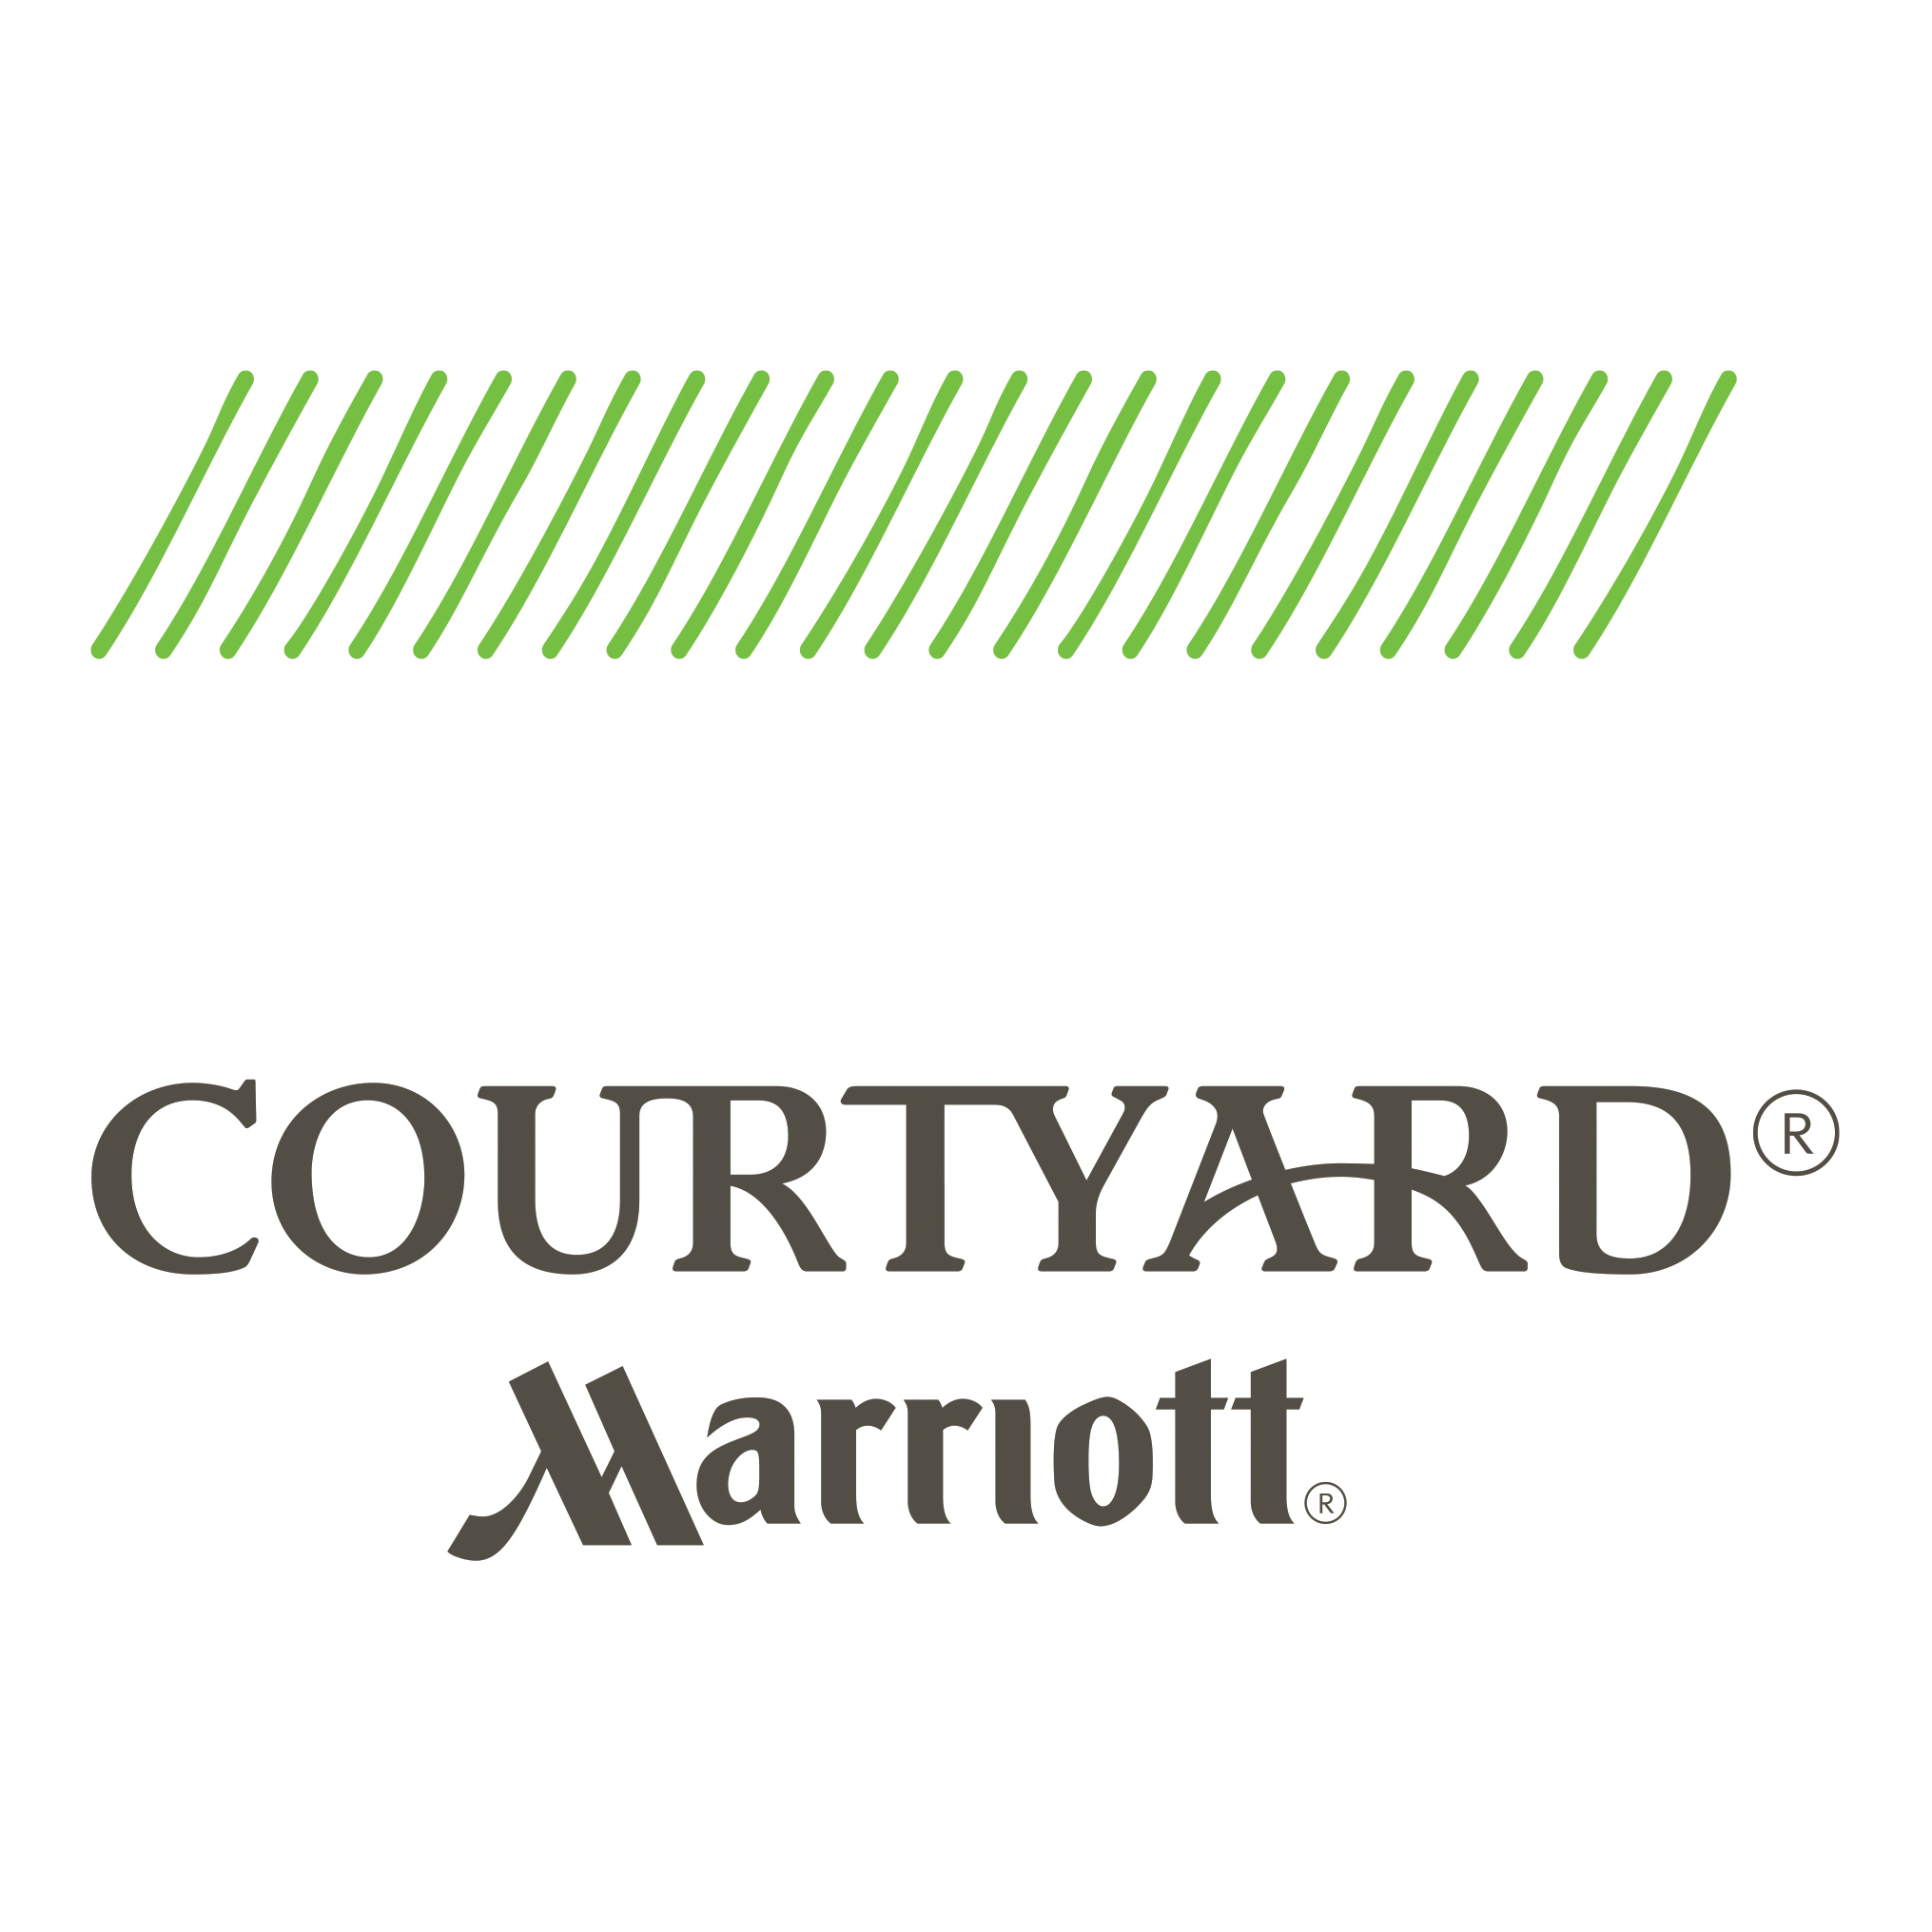 Courtyard by Marriott Dallas Plano in Legacy Park Logo